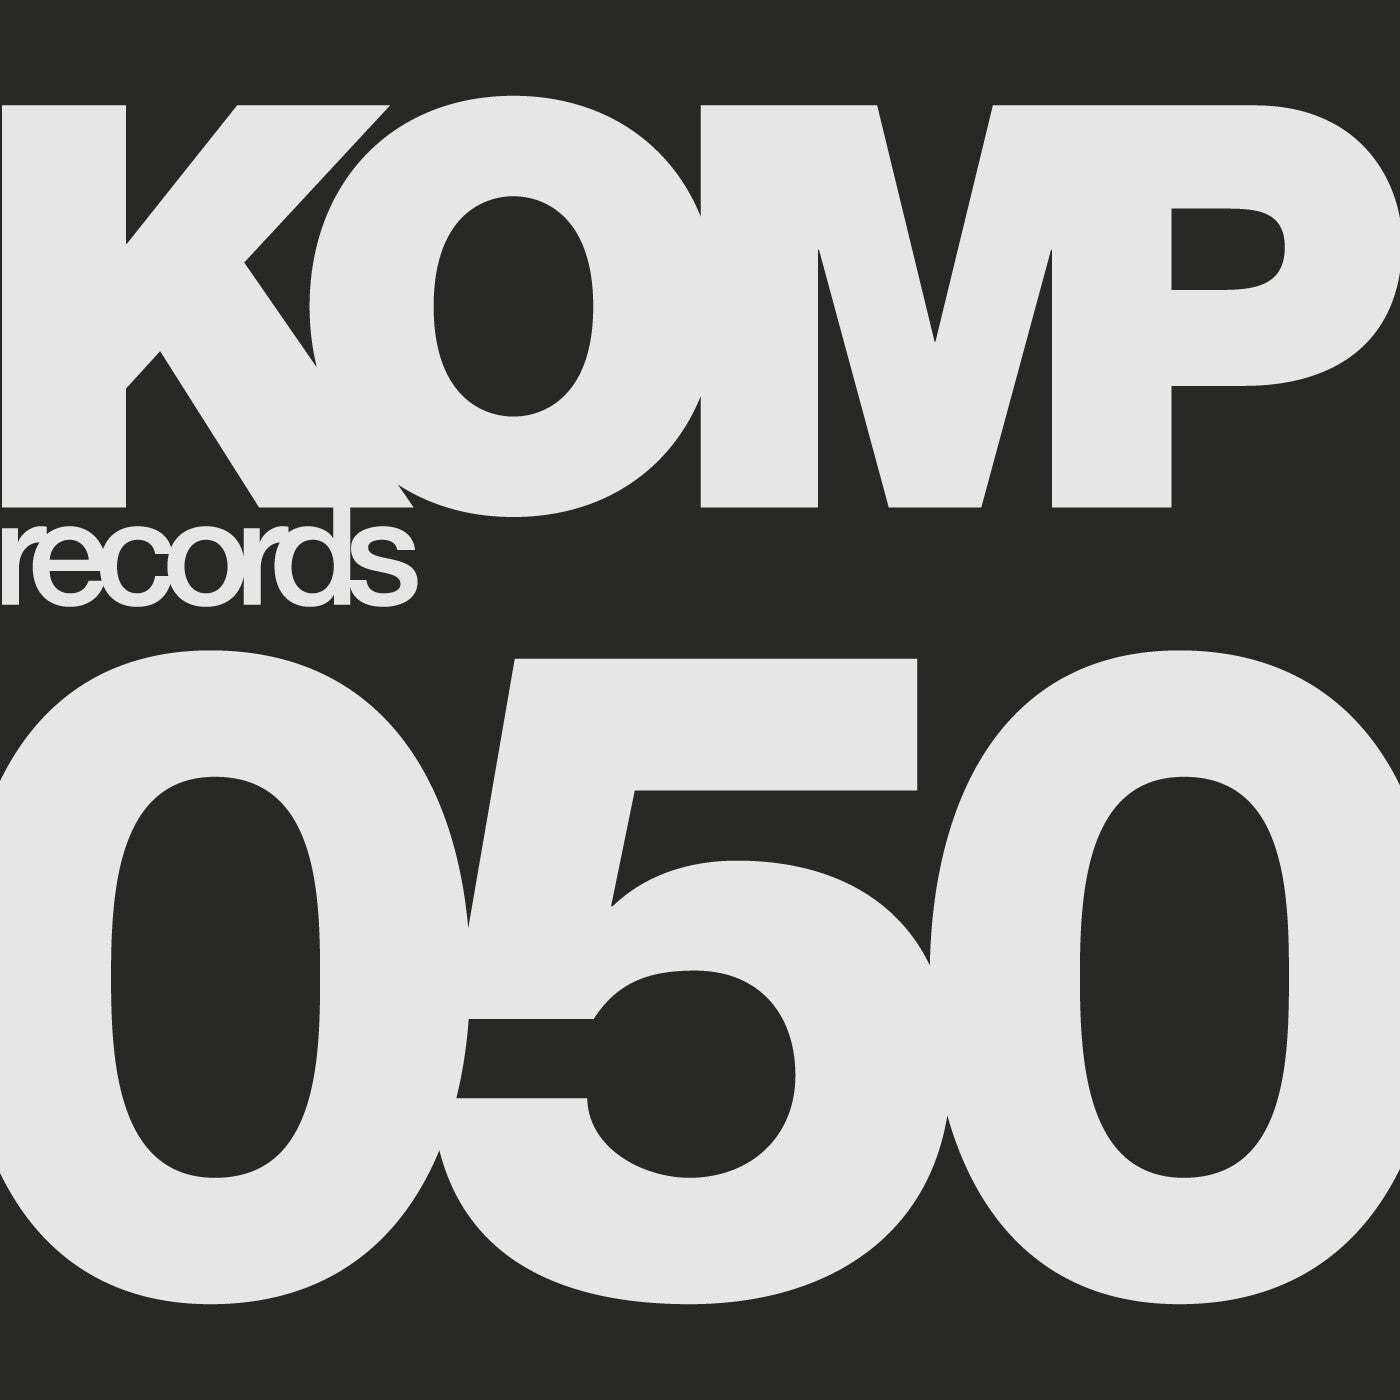 Komp Records 50